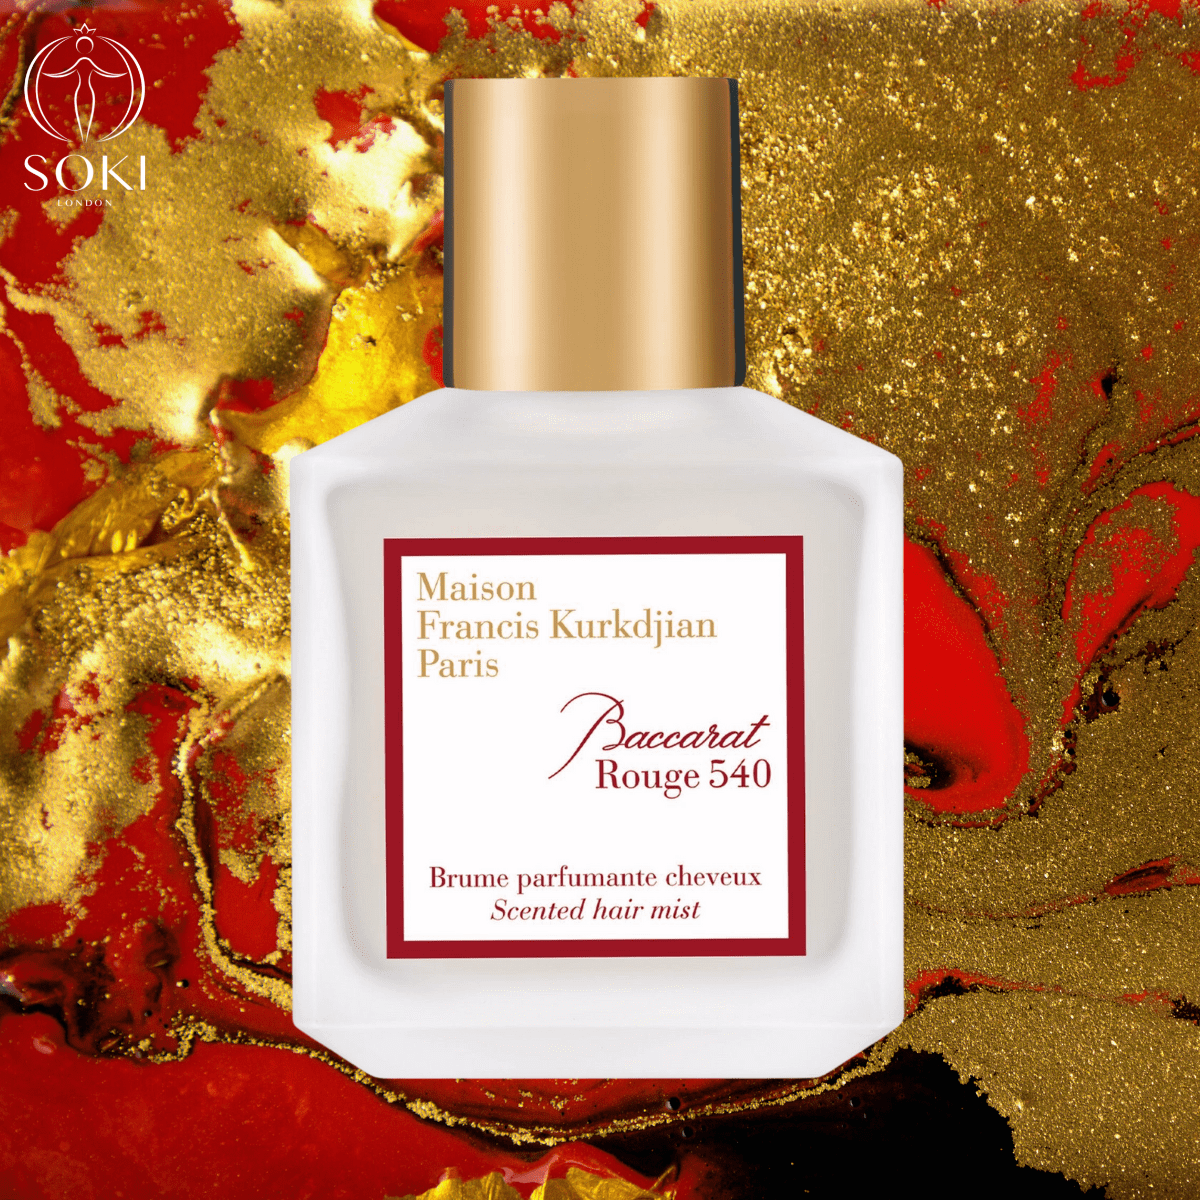 8. Maison Francis Kurkdujan Baccarat Rouge 540 Hair Mist
Best perfume hair mists